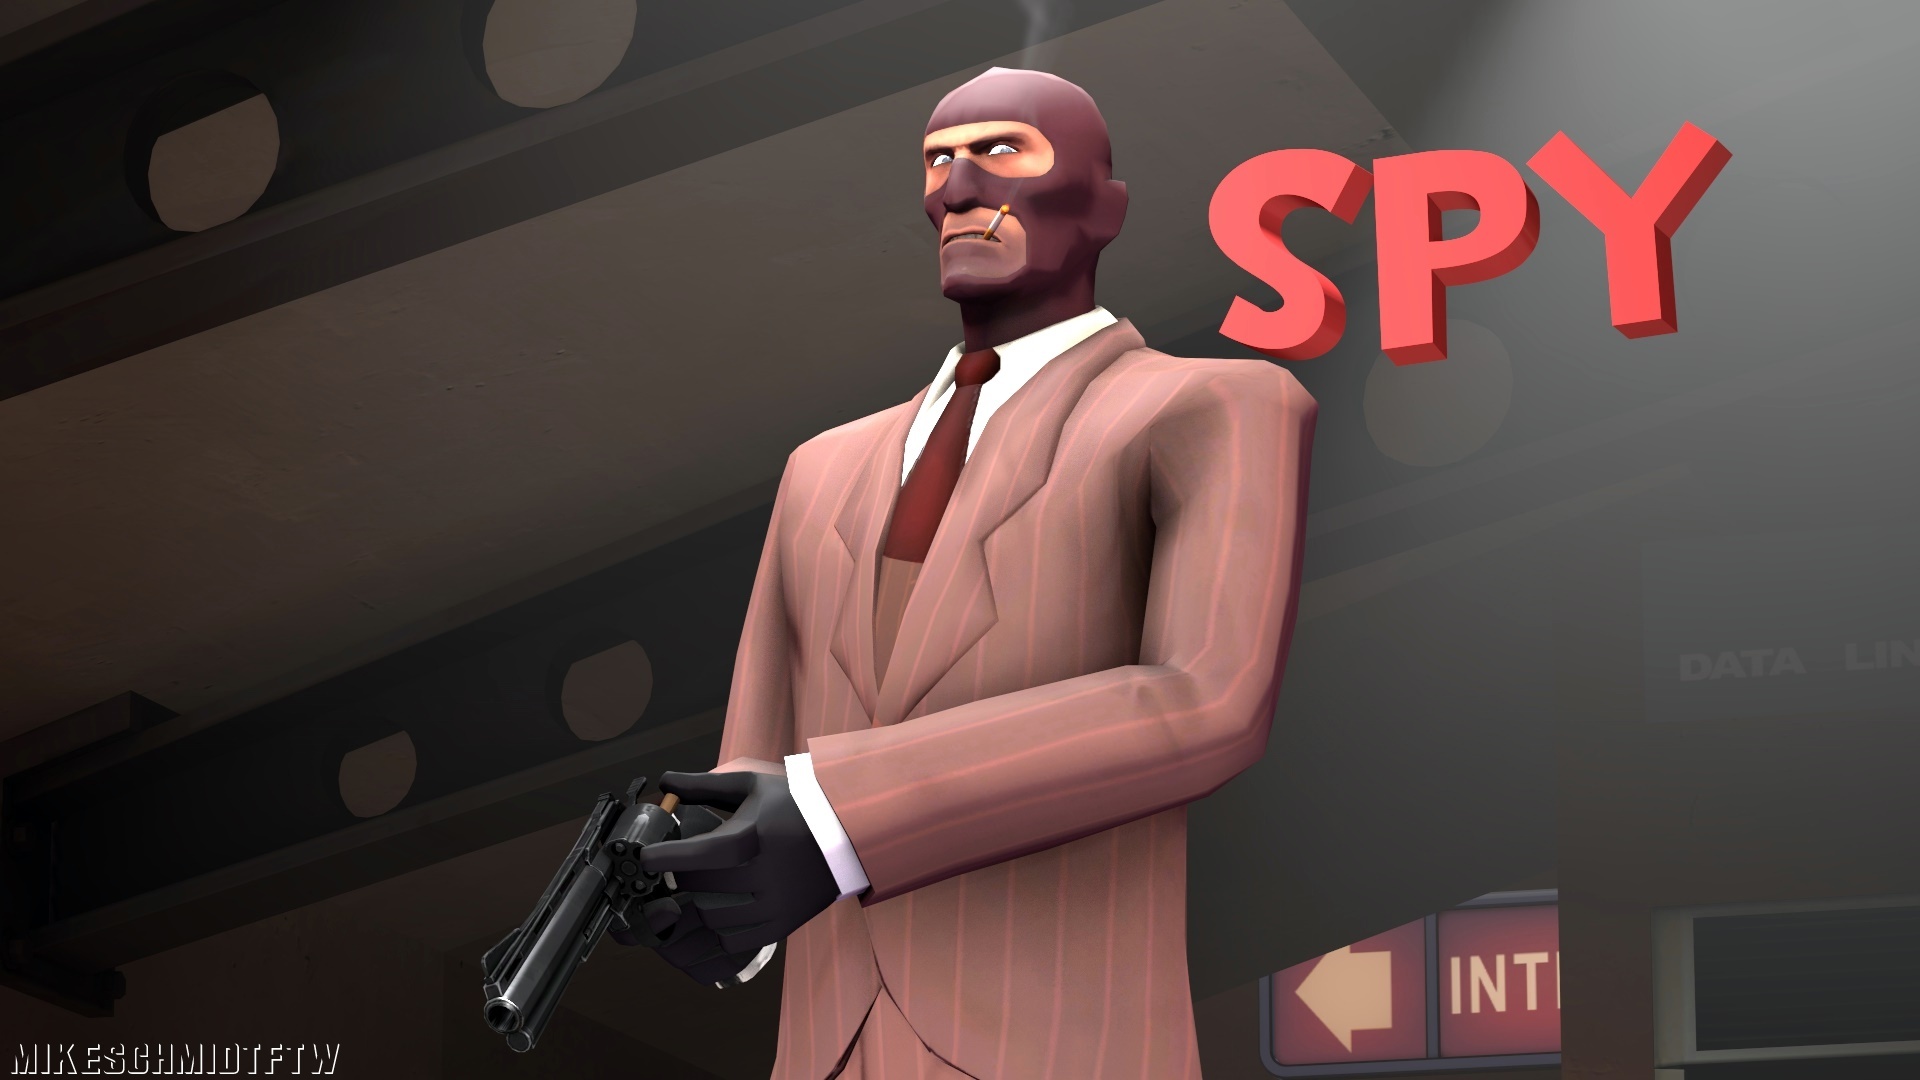 RED Spy (Wallpaper)